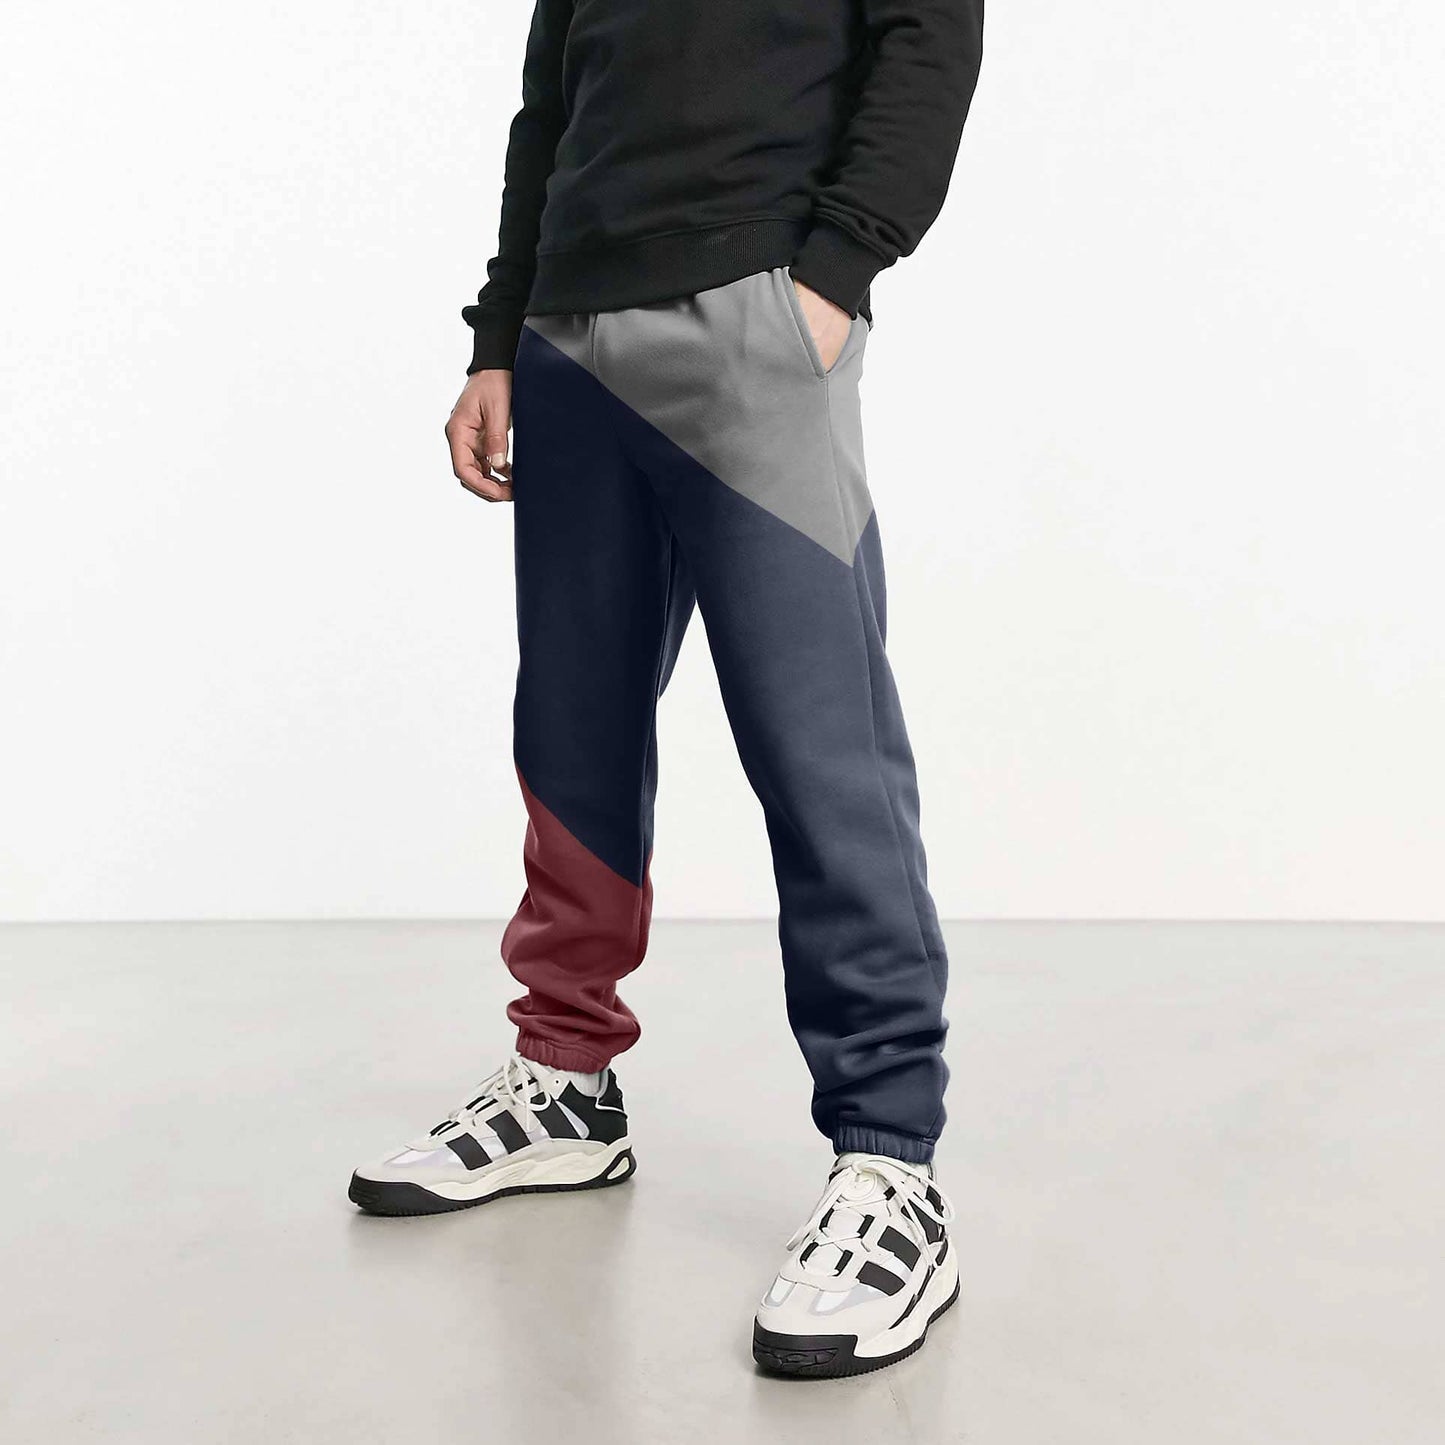 MAX 21 Men's Contrast Design Betim Sweat Pants Men's Trousers SZK Navy & Graphite S 